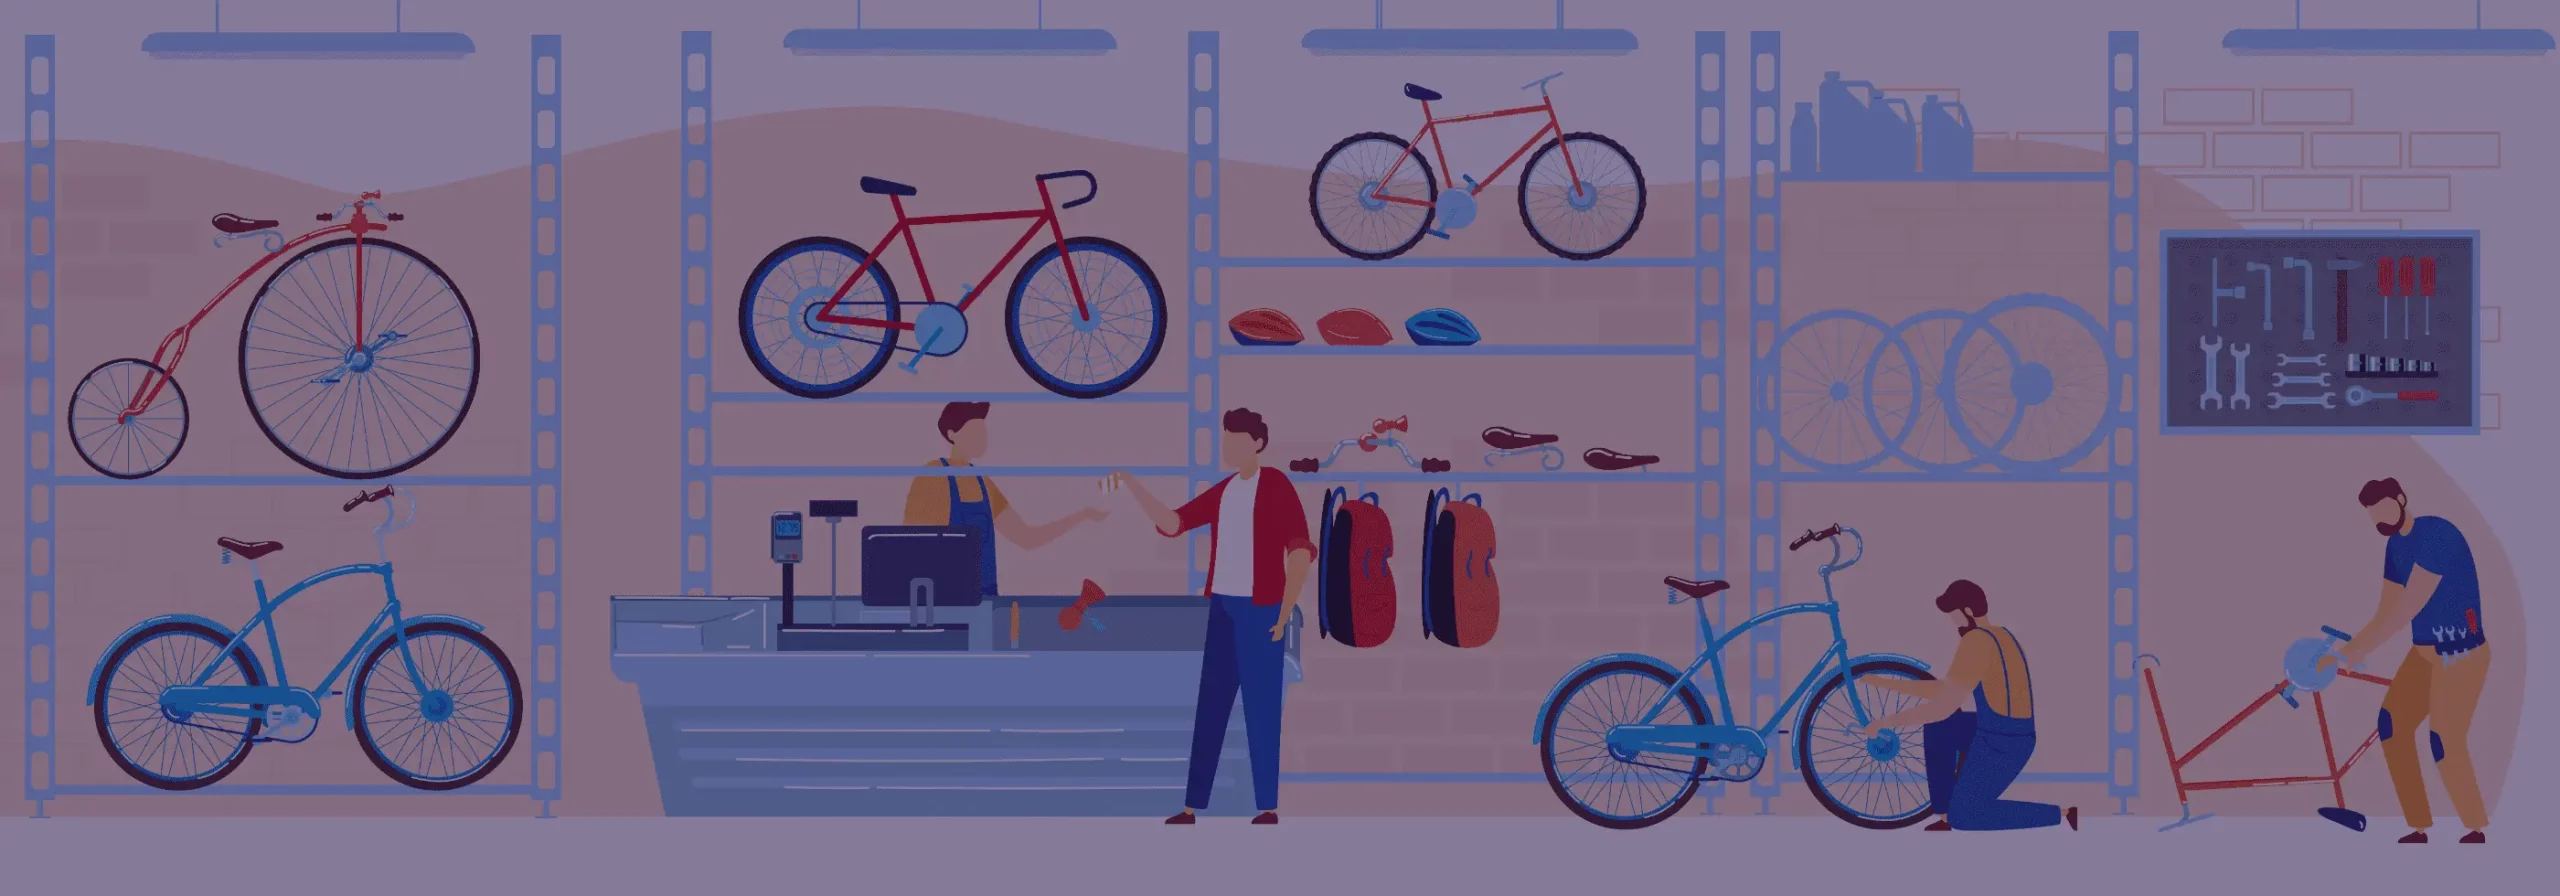 Magasin de vente et location de vélos